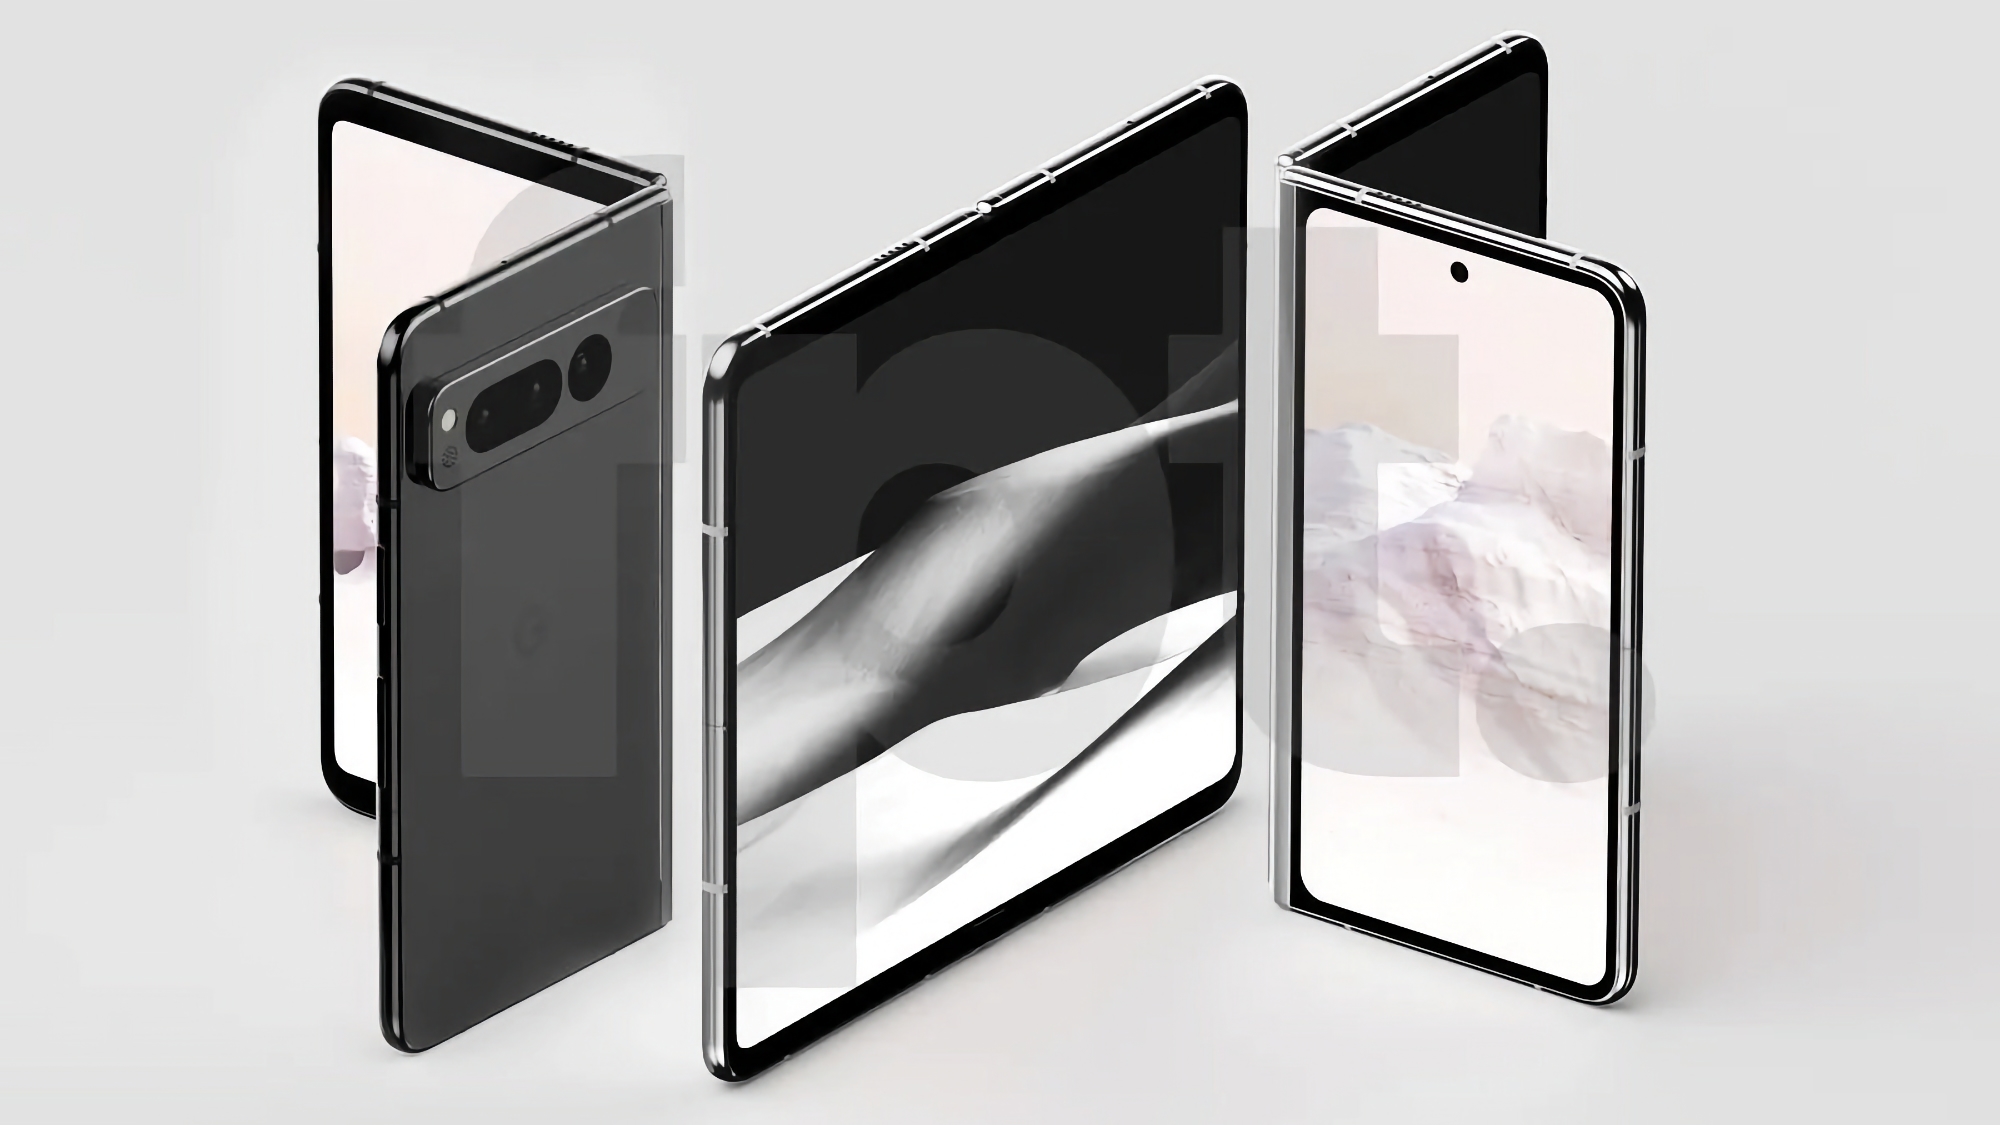 Tańszy od Samsunga Galaxy Fold 4: Insider ujawnia cenę smartfona Google Pixel Fold